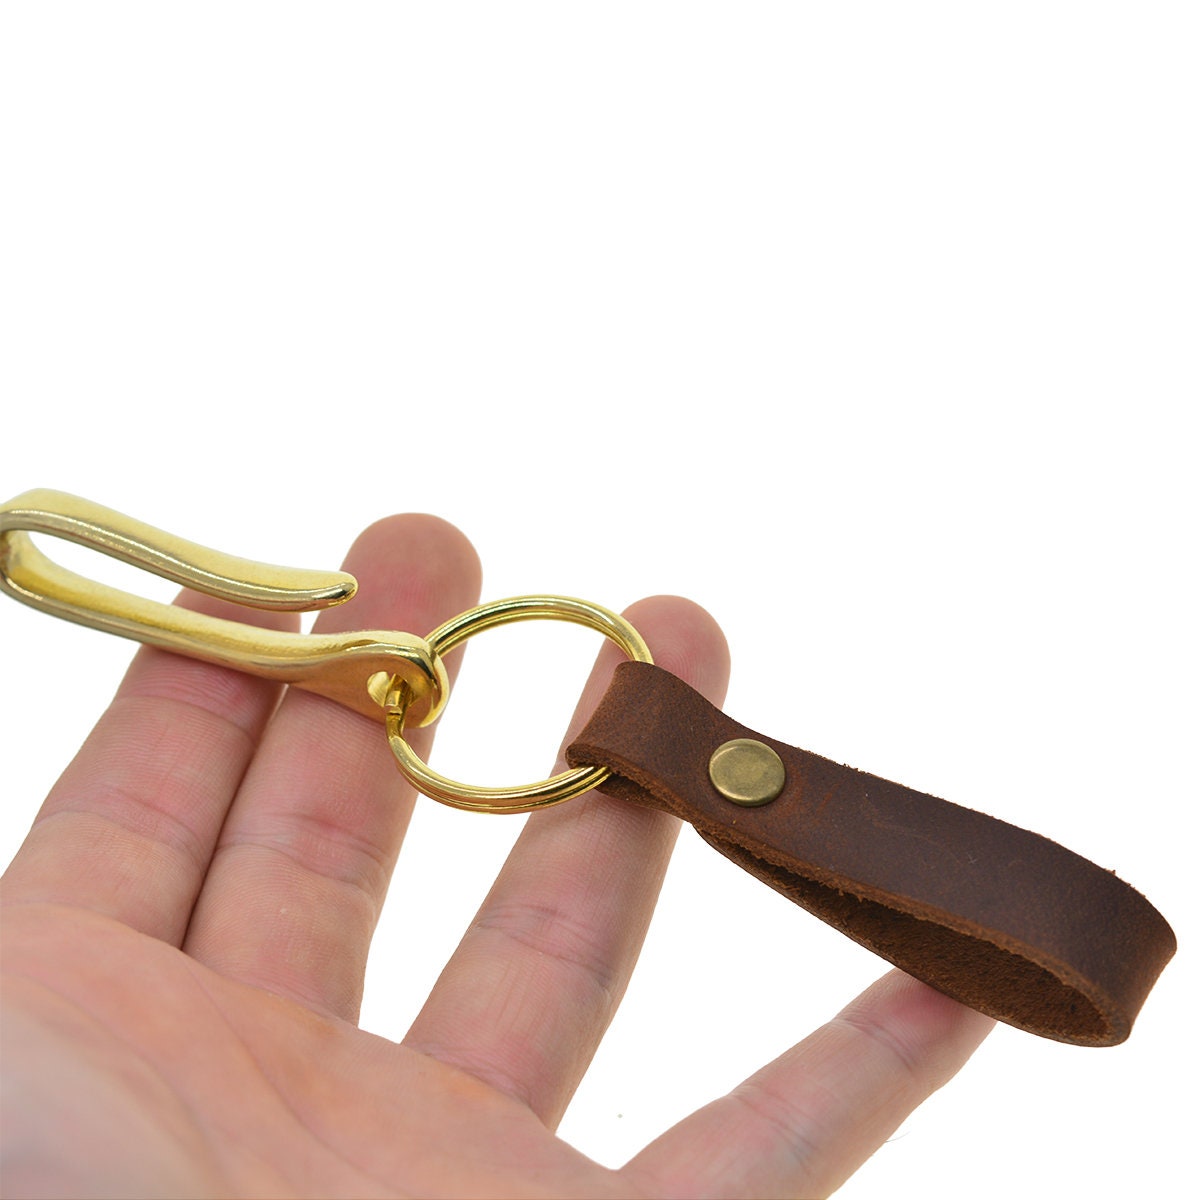 Handmade Solid Brass Japanese Fish Hook U Hook Belt Clasp Leather Strap  Keychain Keyholder Tan Brown and Khaki 